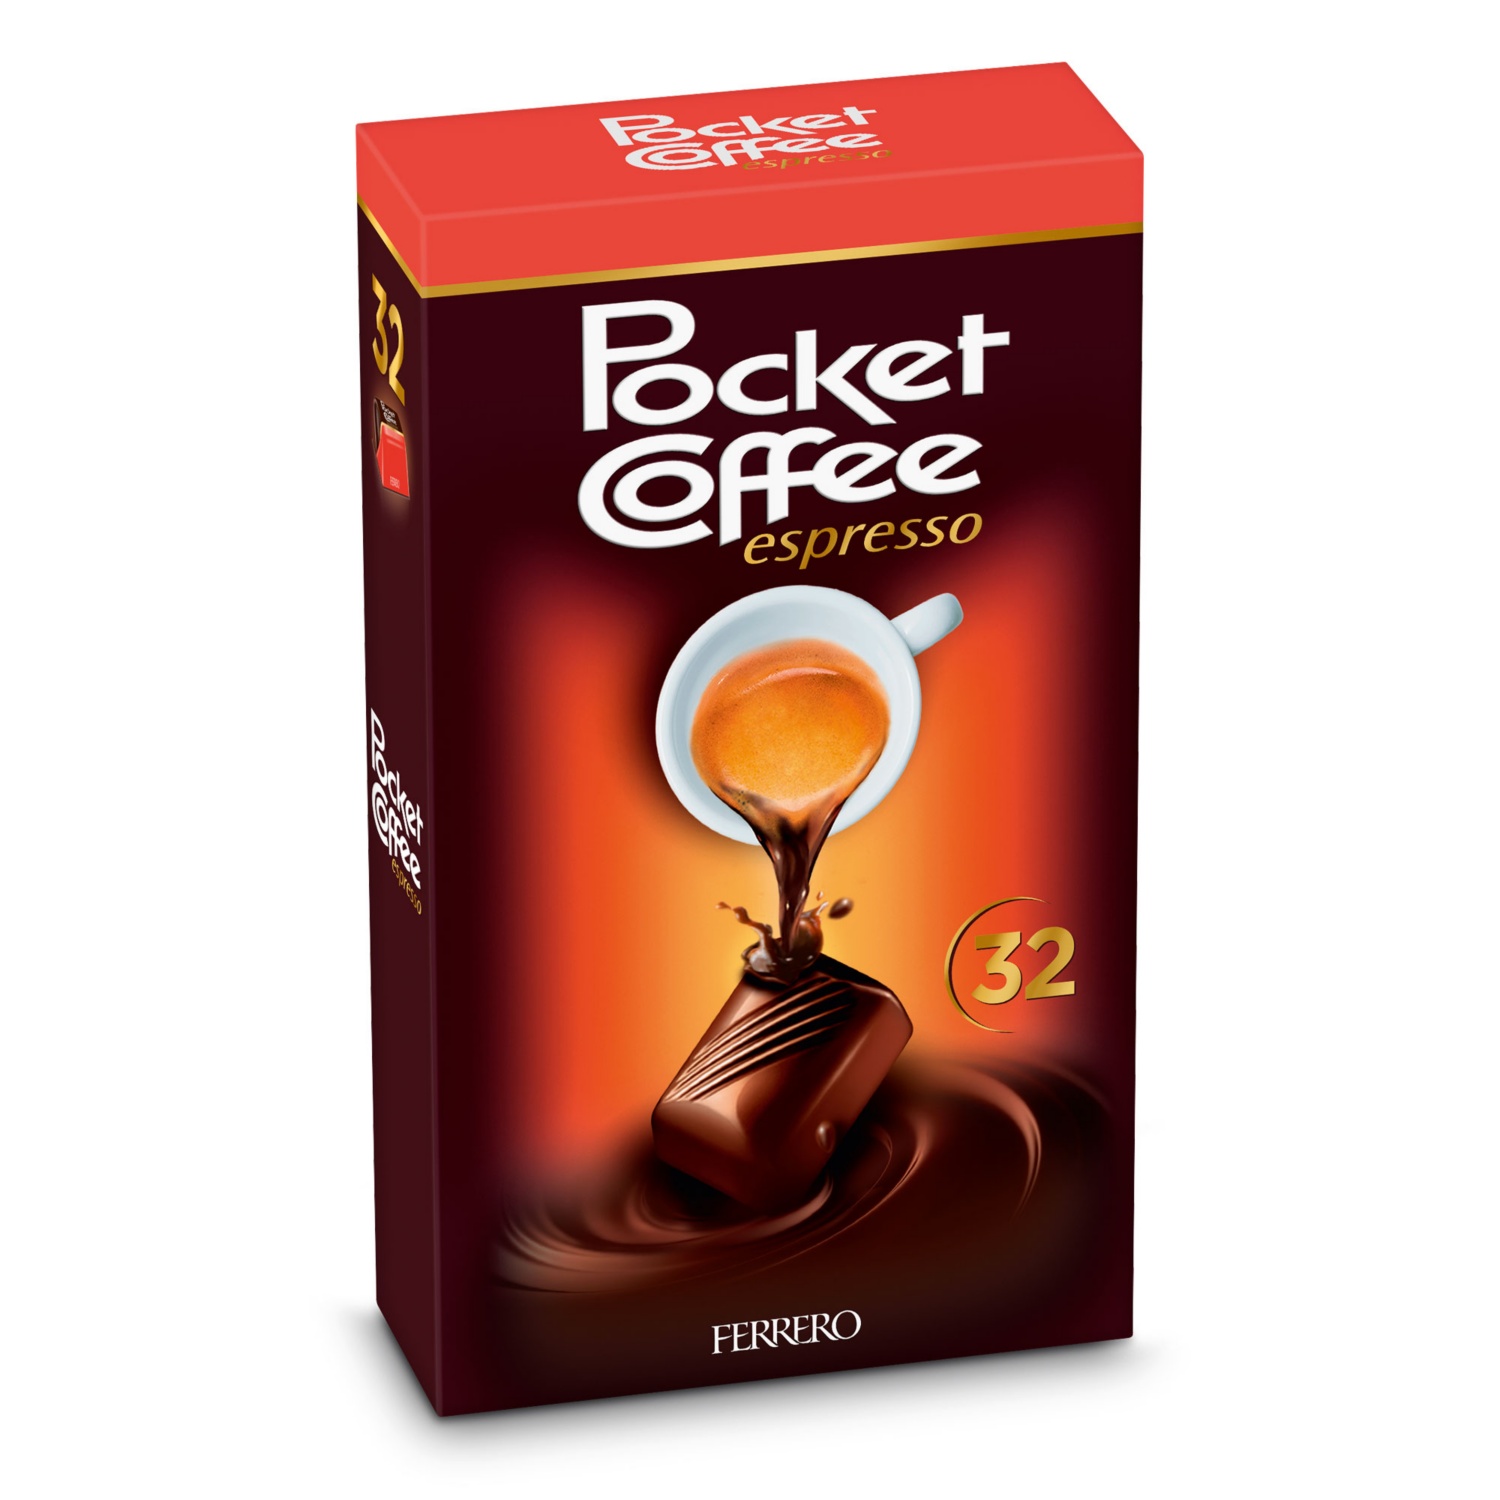 FERRERO Pocket Coffee